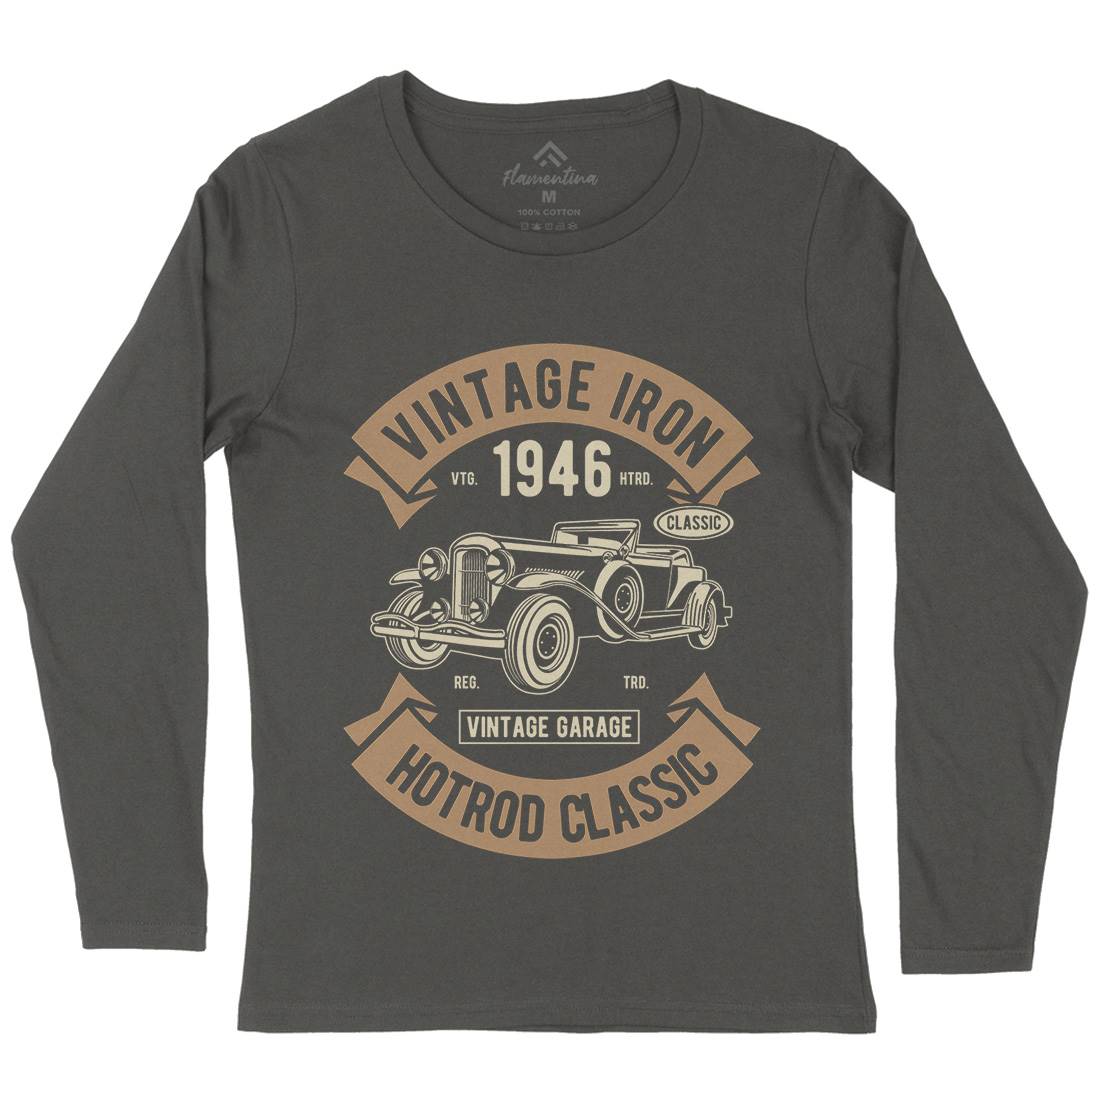 Vintage Iron Classic Womens Long Sleeve T-Shirt Cars D595